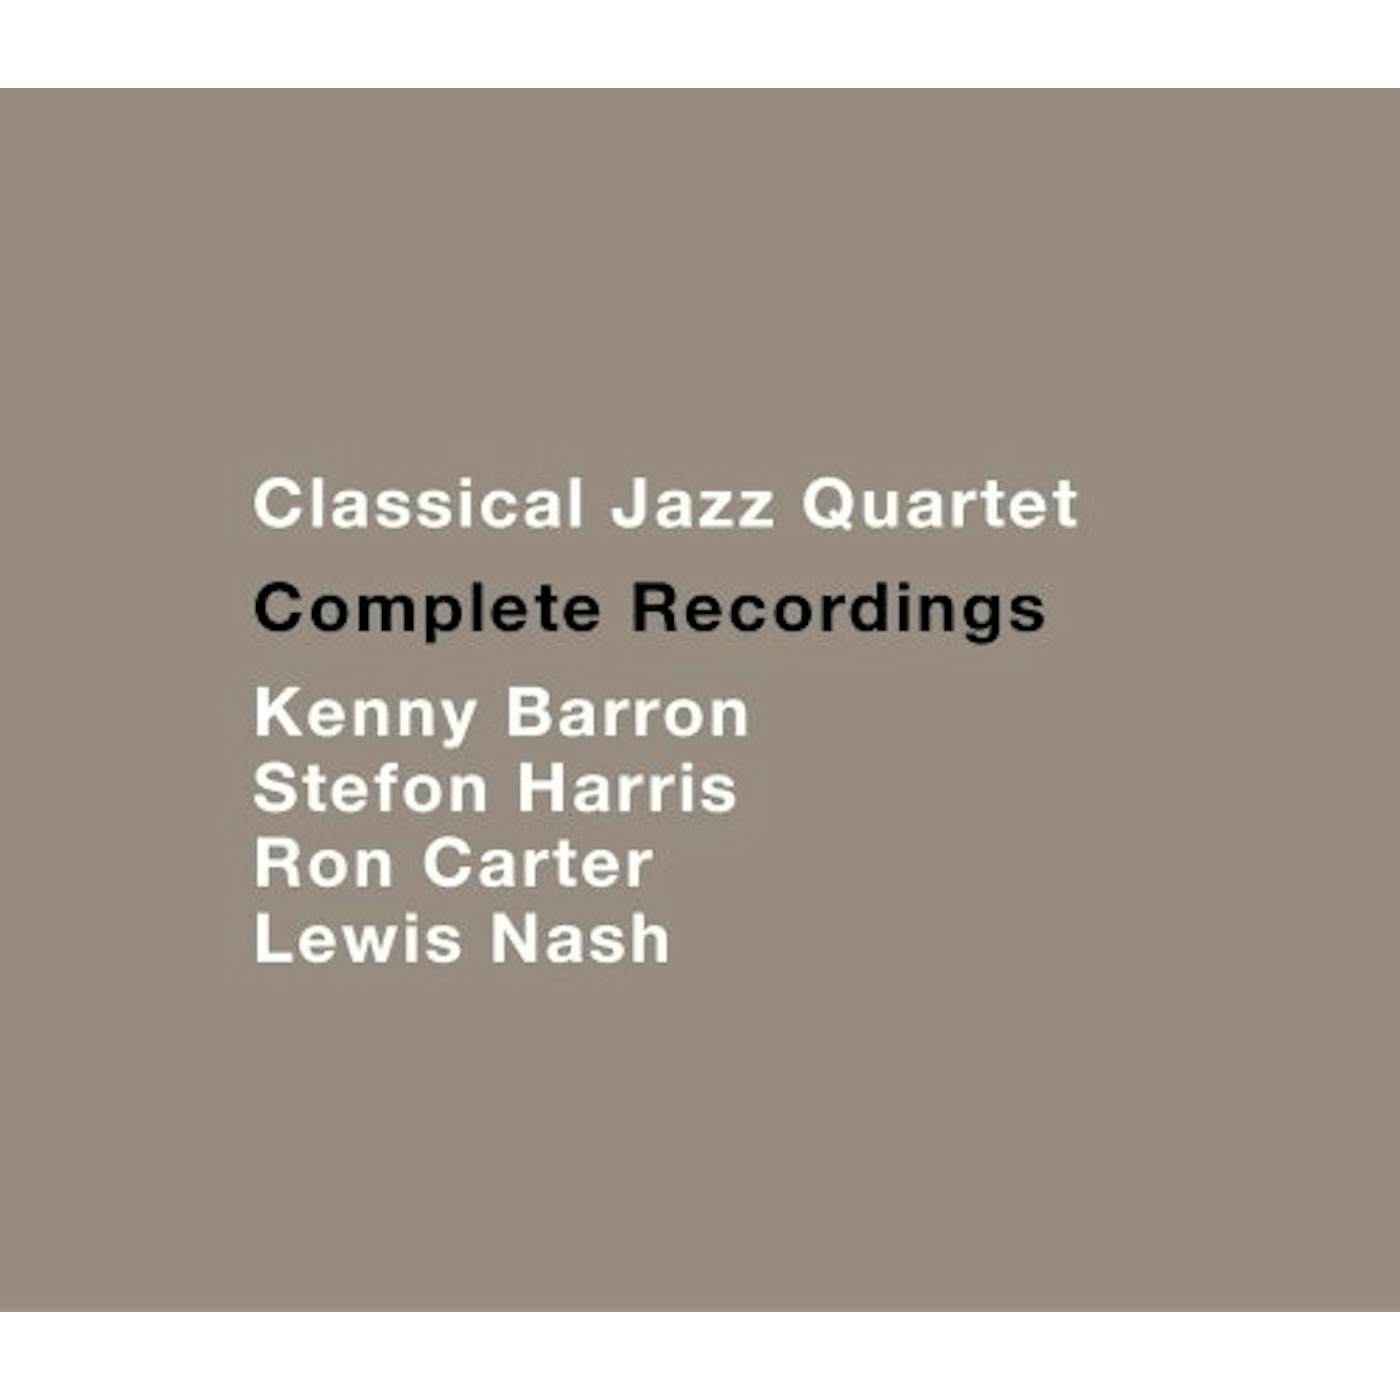 The Classical Jazz Quartet COMPLETE RECORDINGS CD